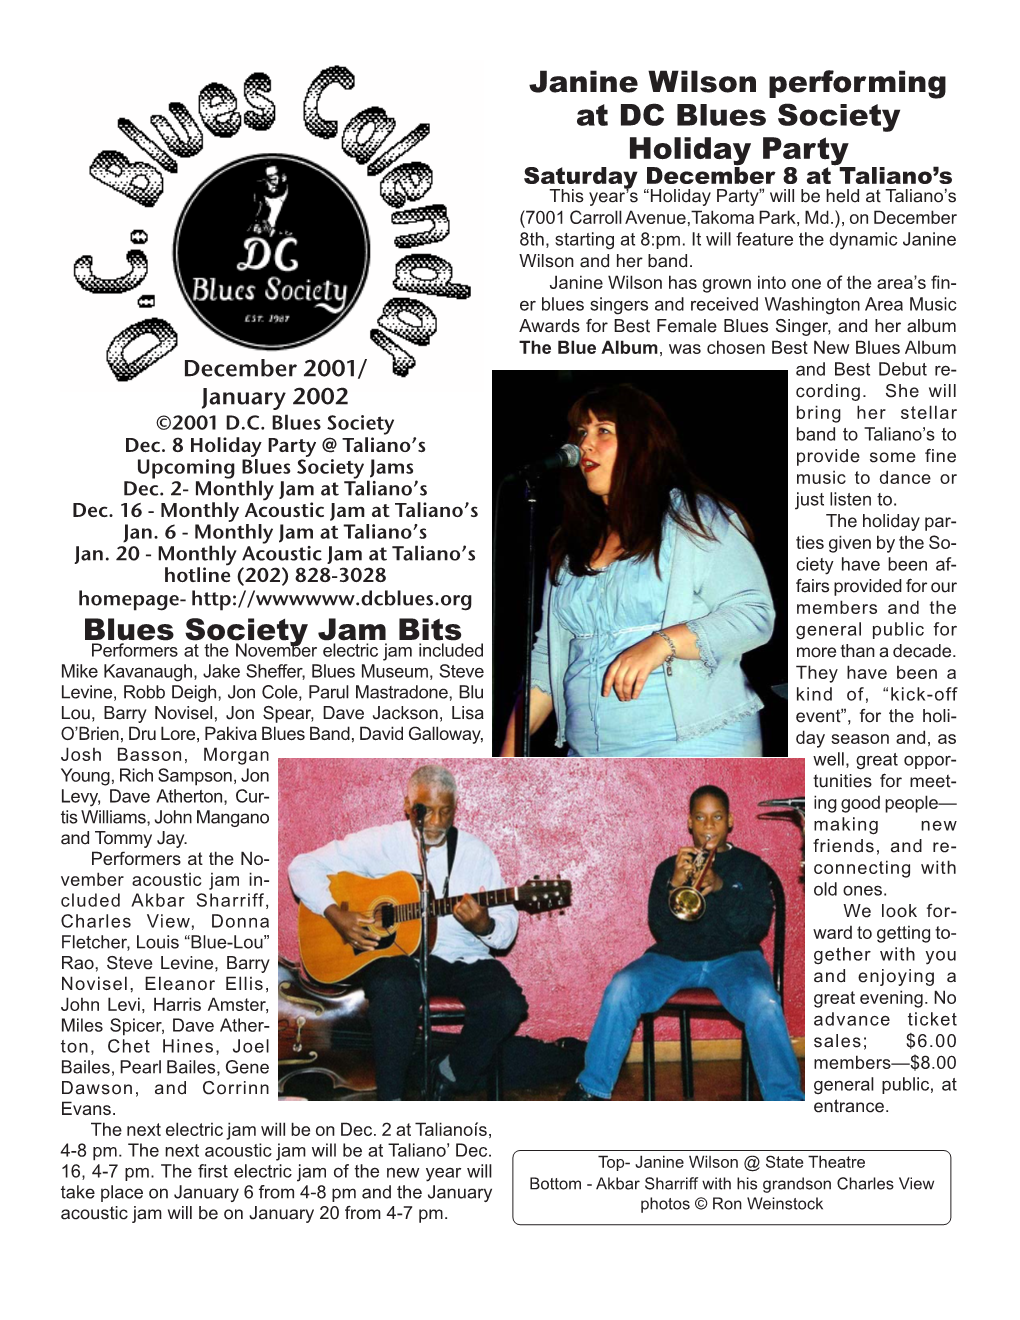 Janine Wilson Performing at DC Blues Society Holiday Party Blues Society Jam Bits